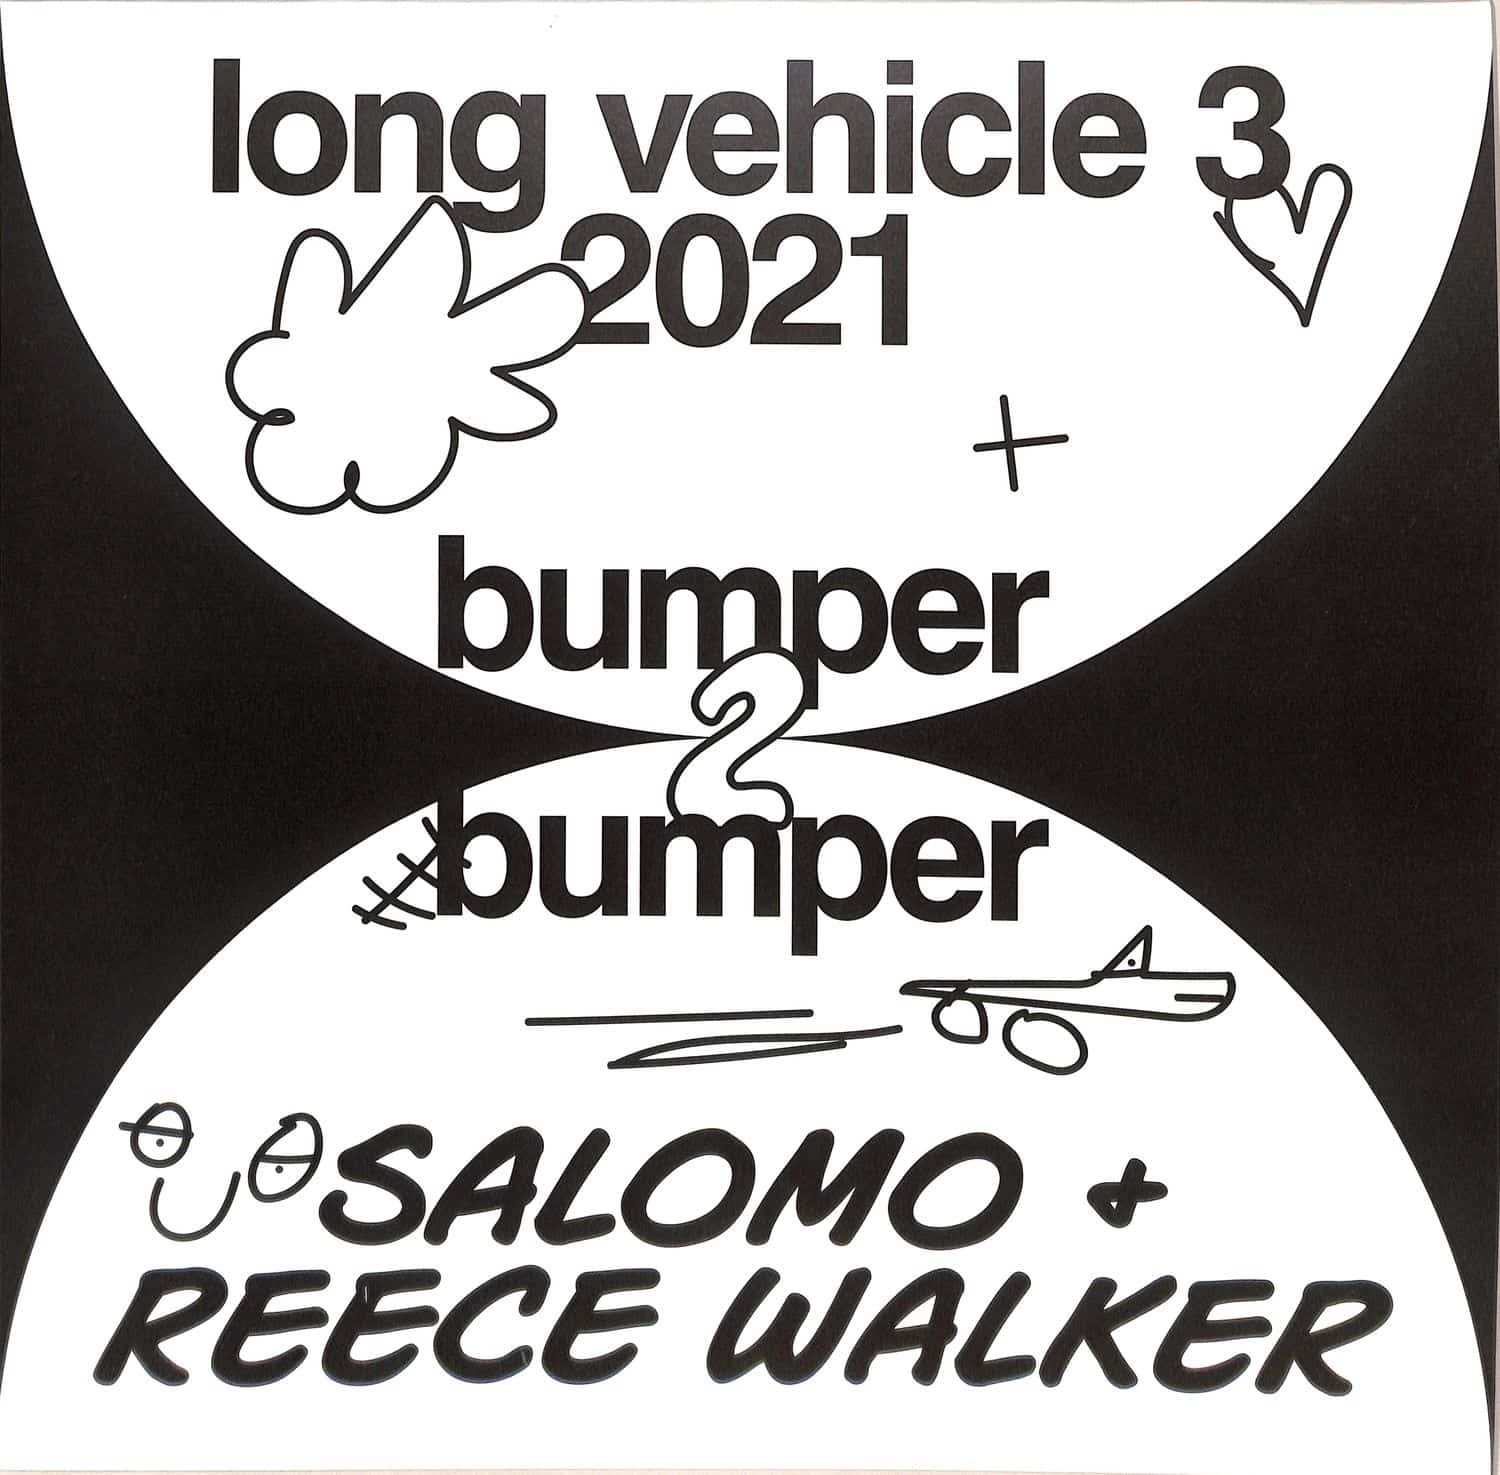 Salomo & Reece Walker - BUMPER 2 BUMPER